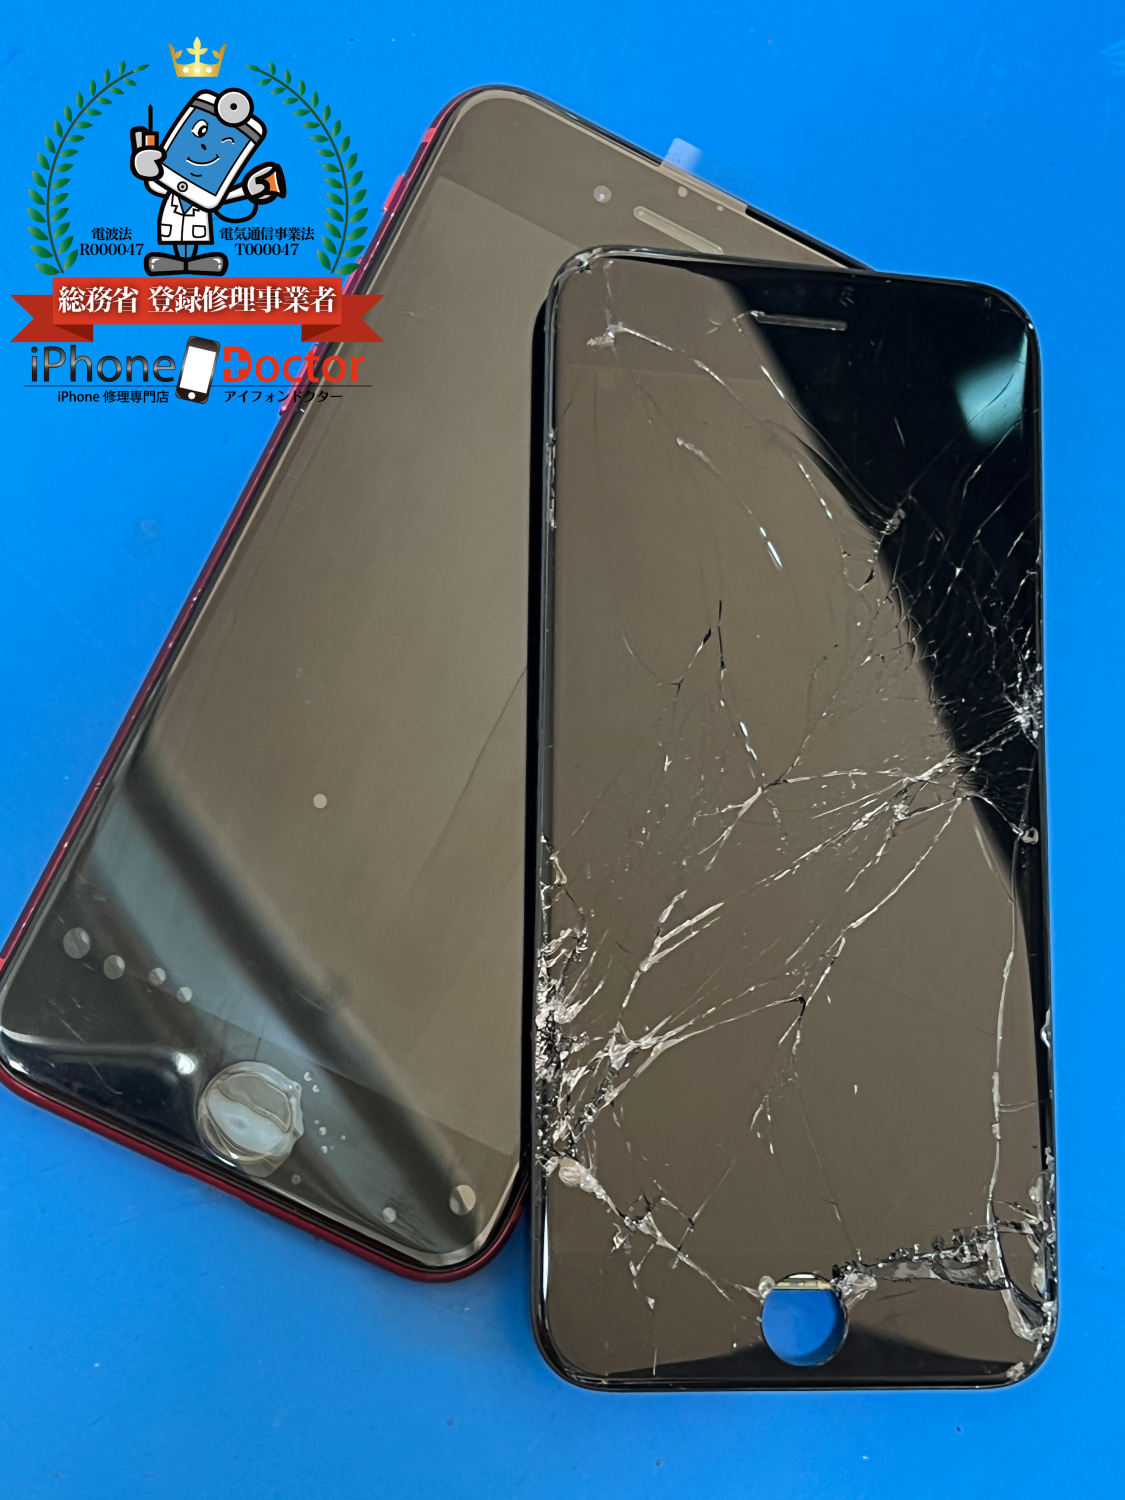 iPhone8ガラス割れ交換修理